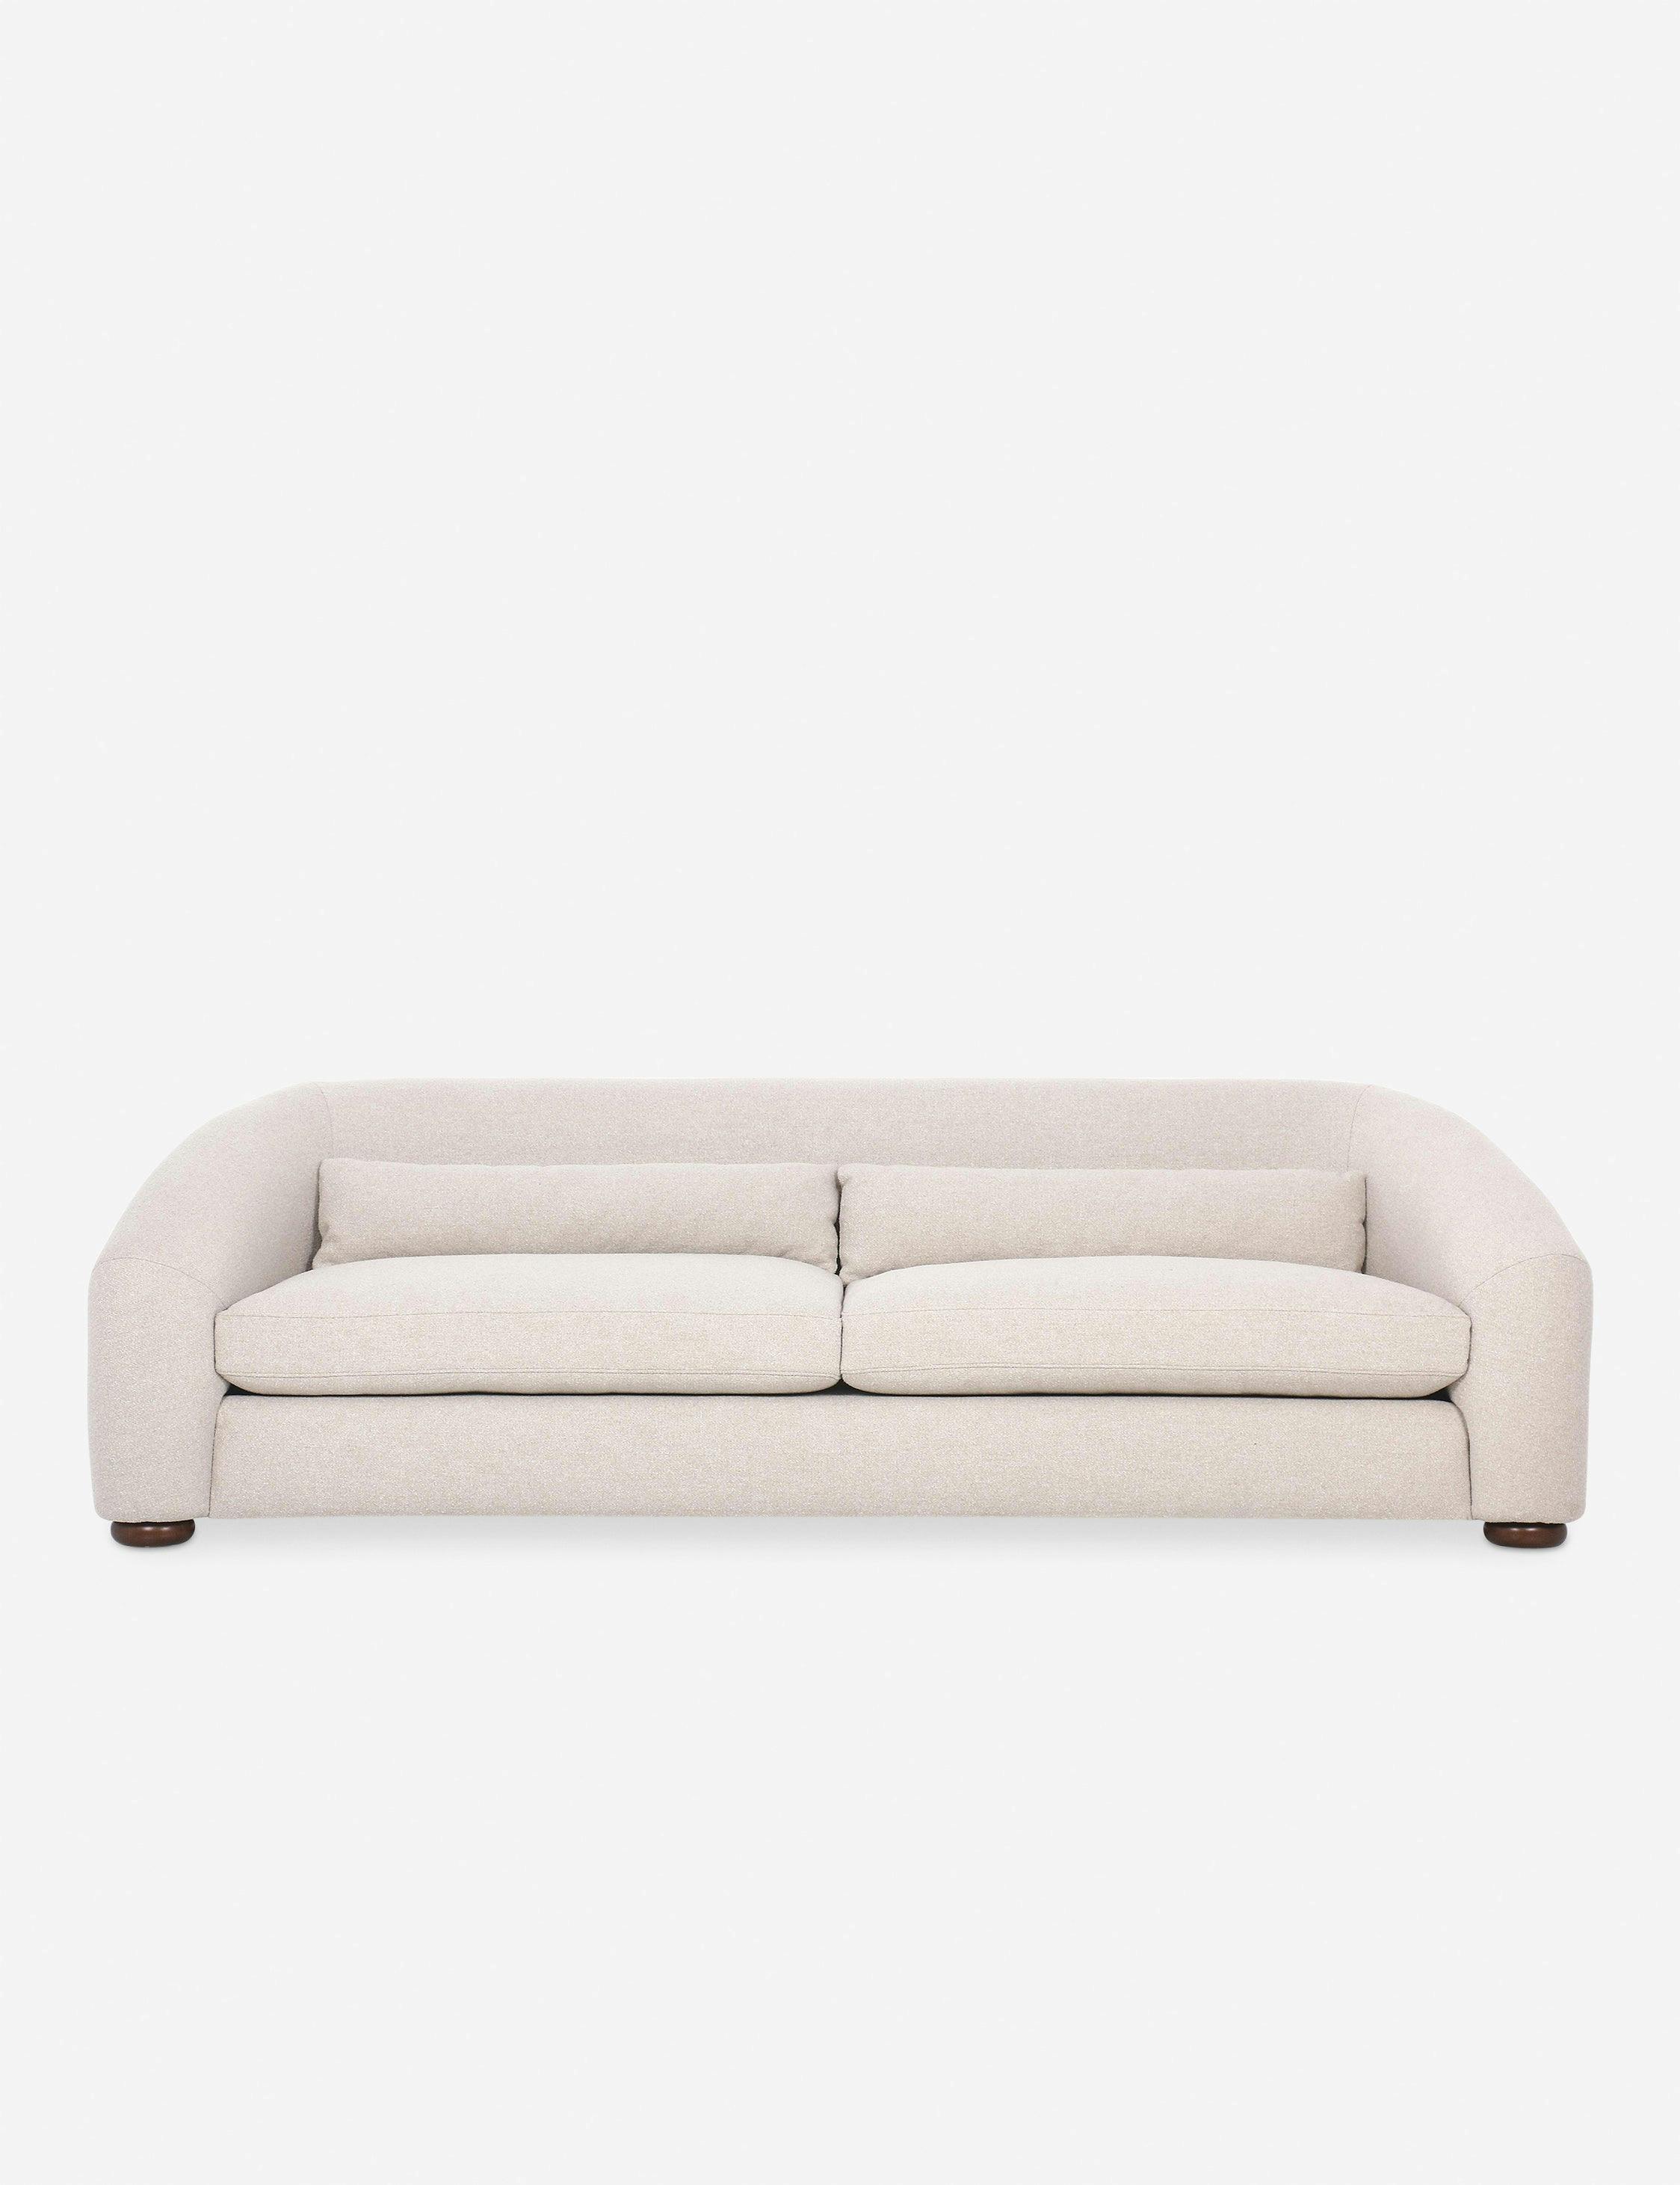 Mewis Natural Winfield Sofa